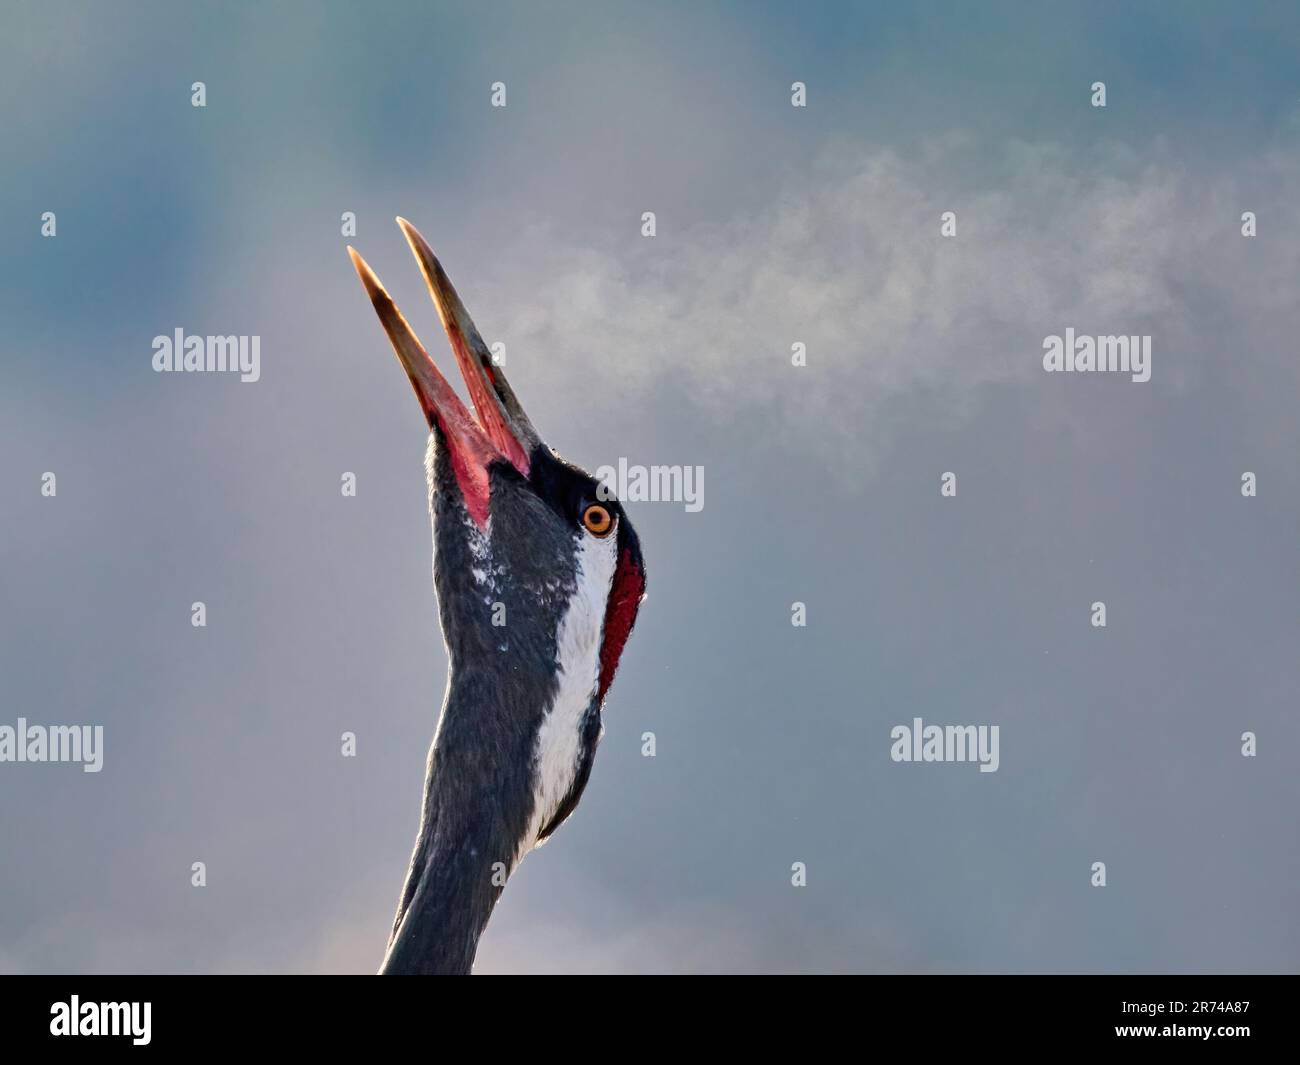 Common crane (Grus grus) in its natural environment Stock Photo